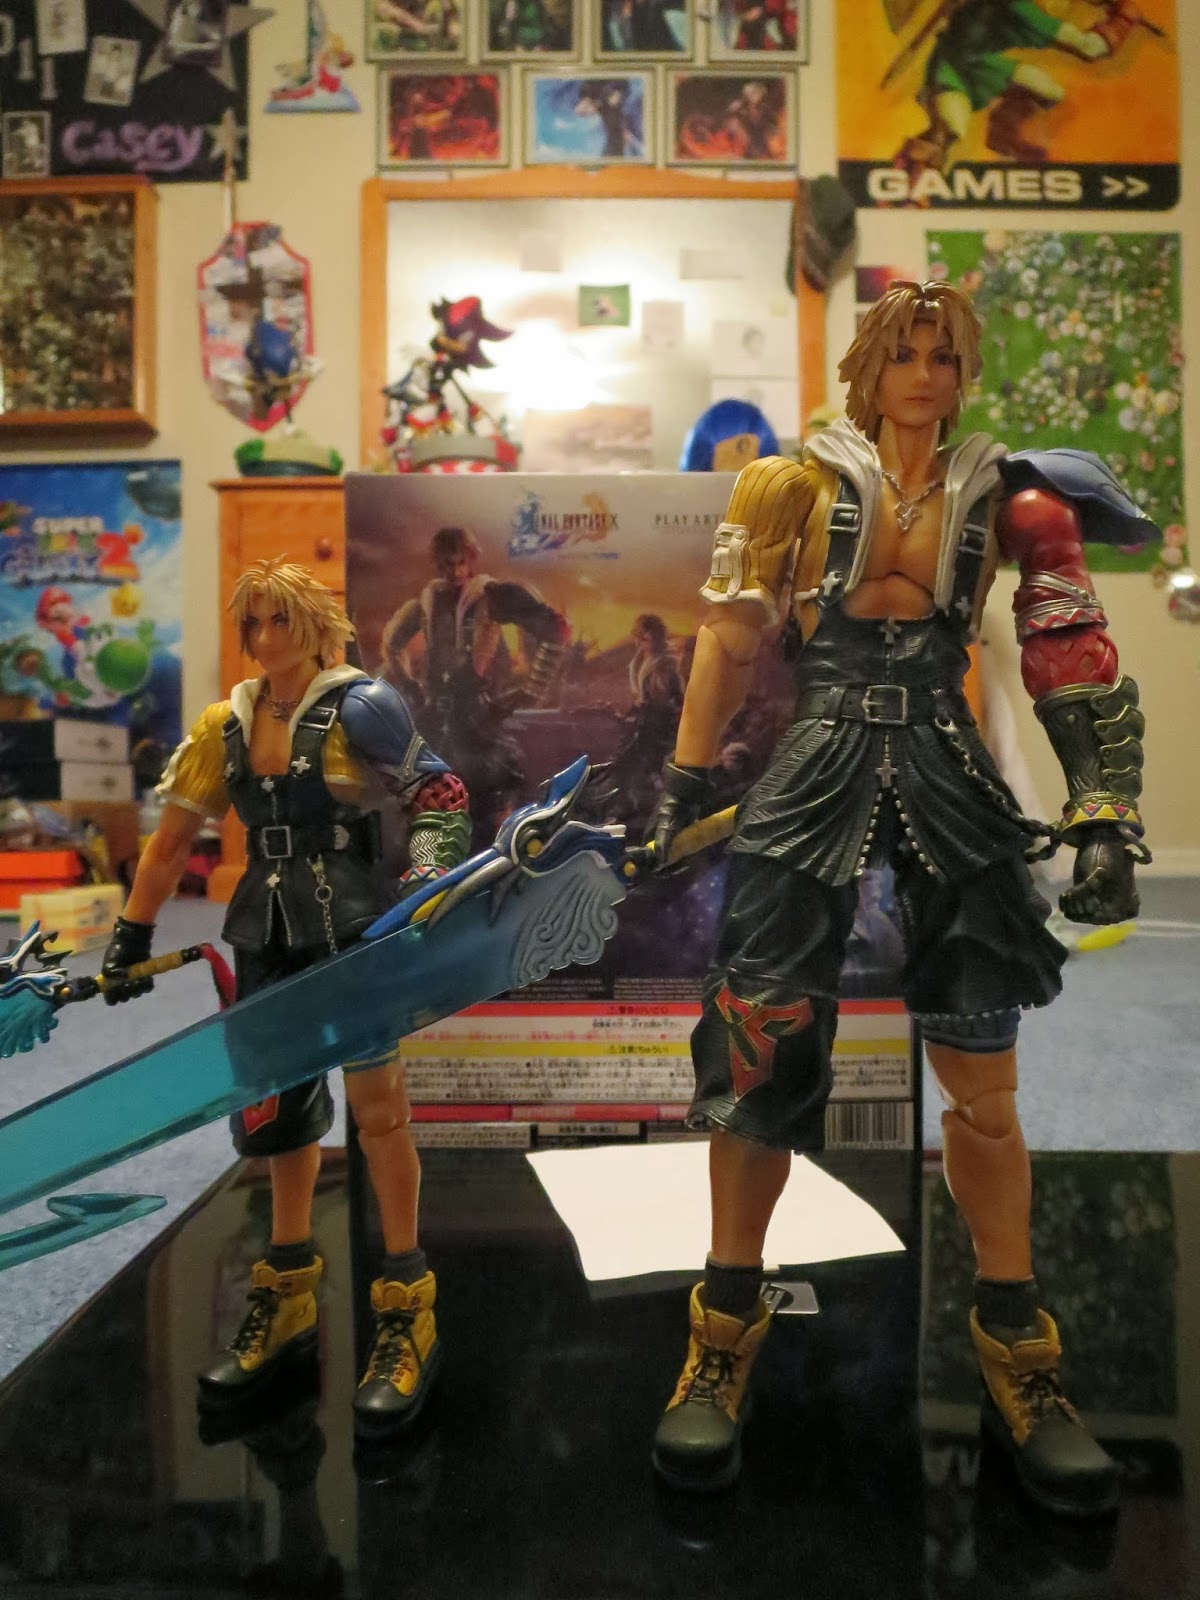 Final Fantasy X Tidus Play Arts Kai Action Figure